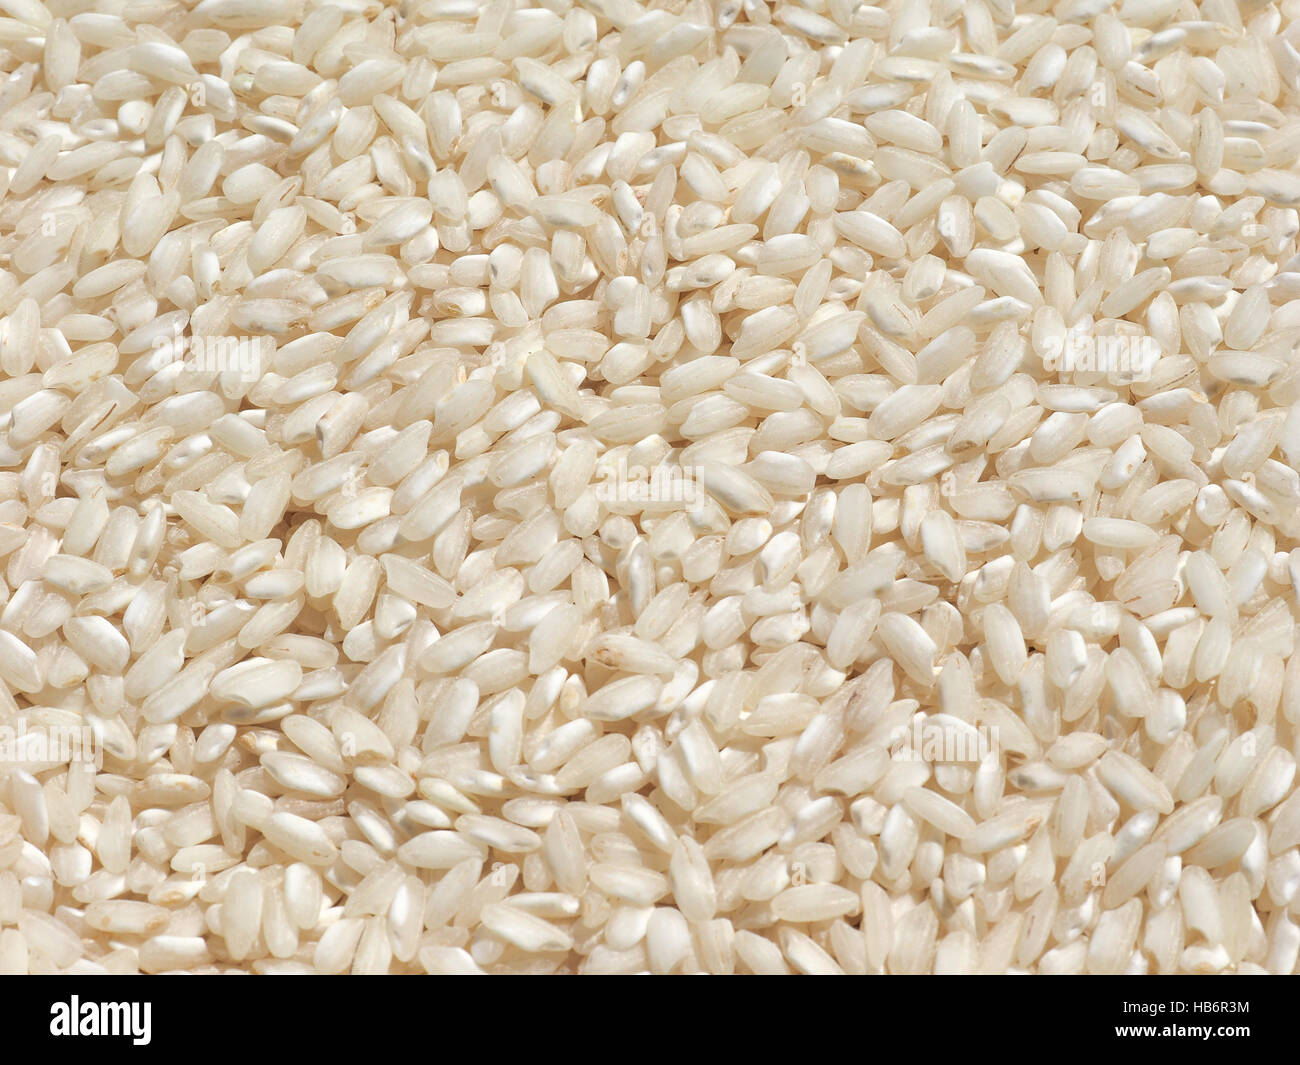 Carnaroli rice food Stock Photo - Alamy